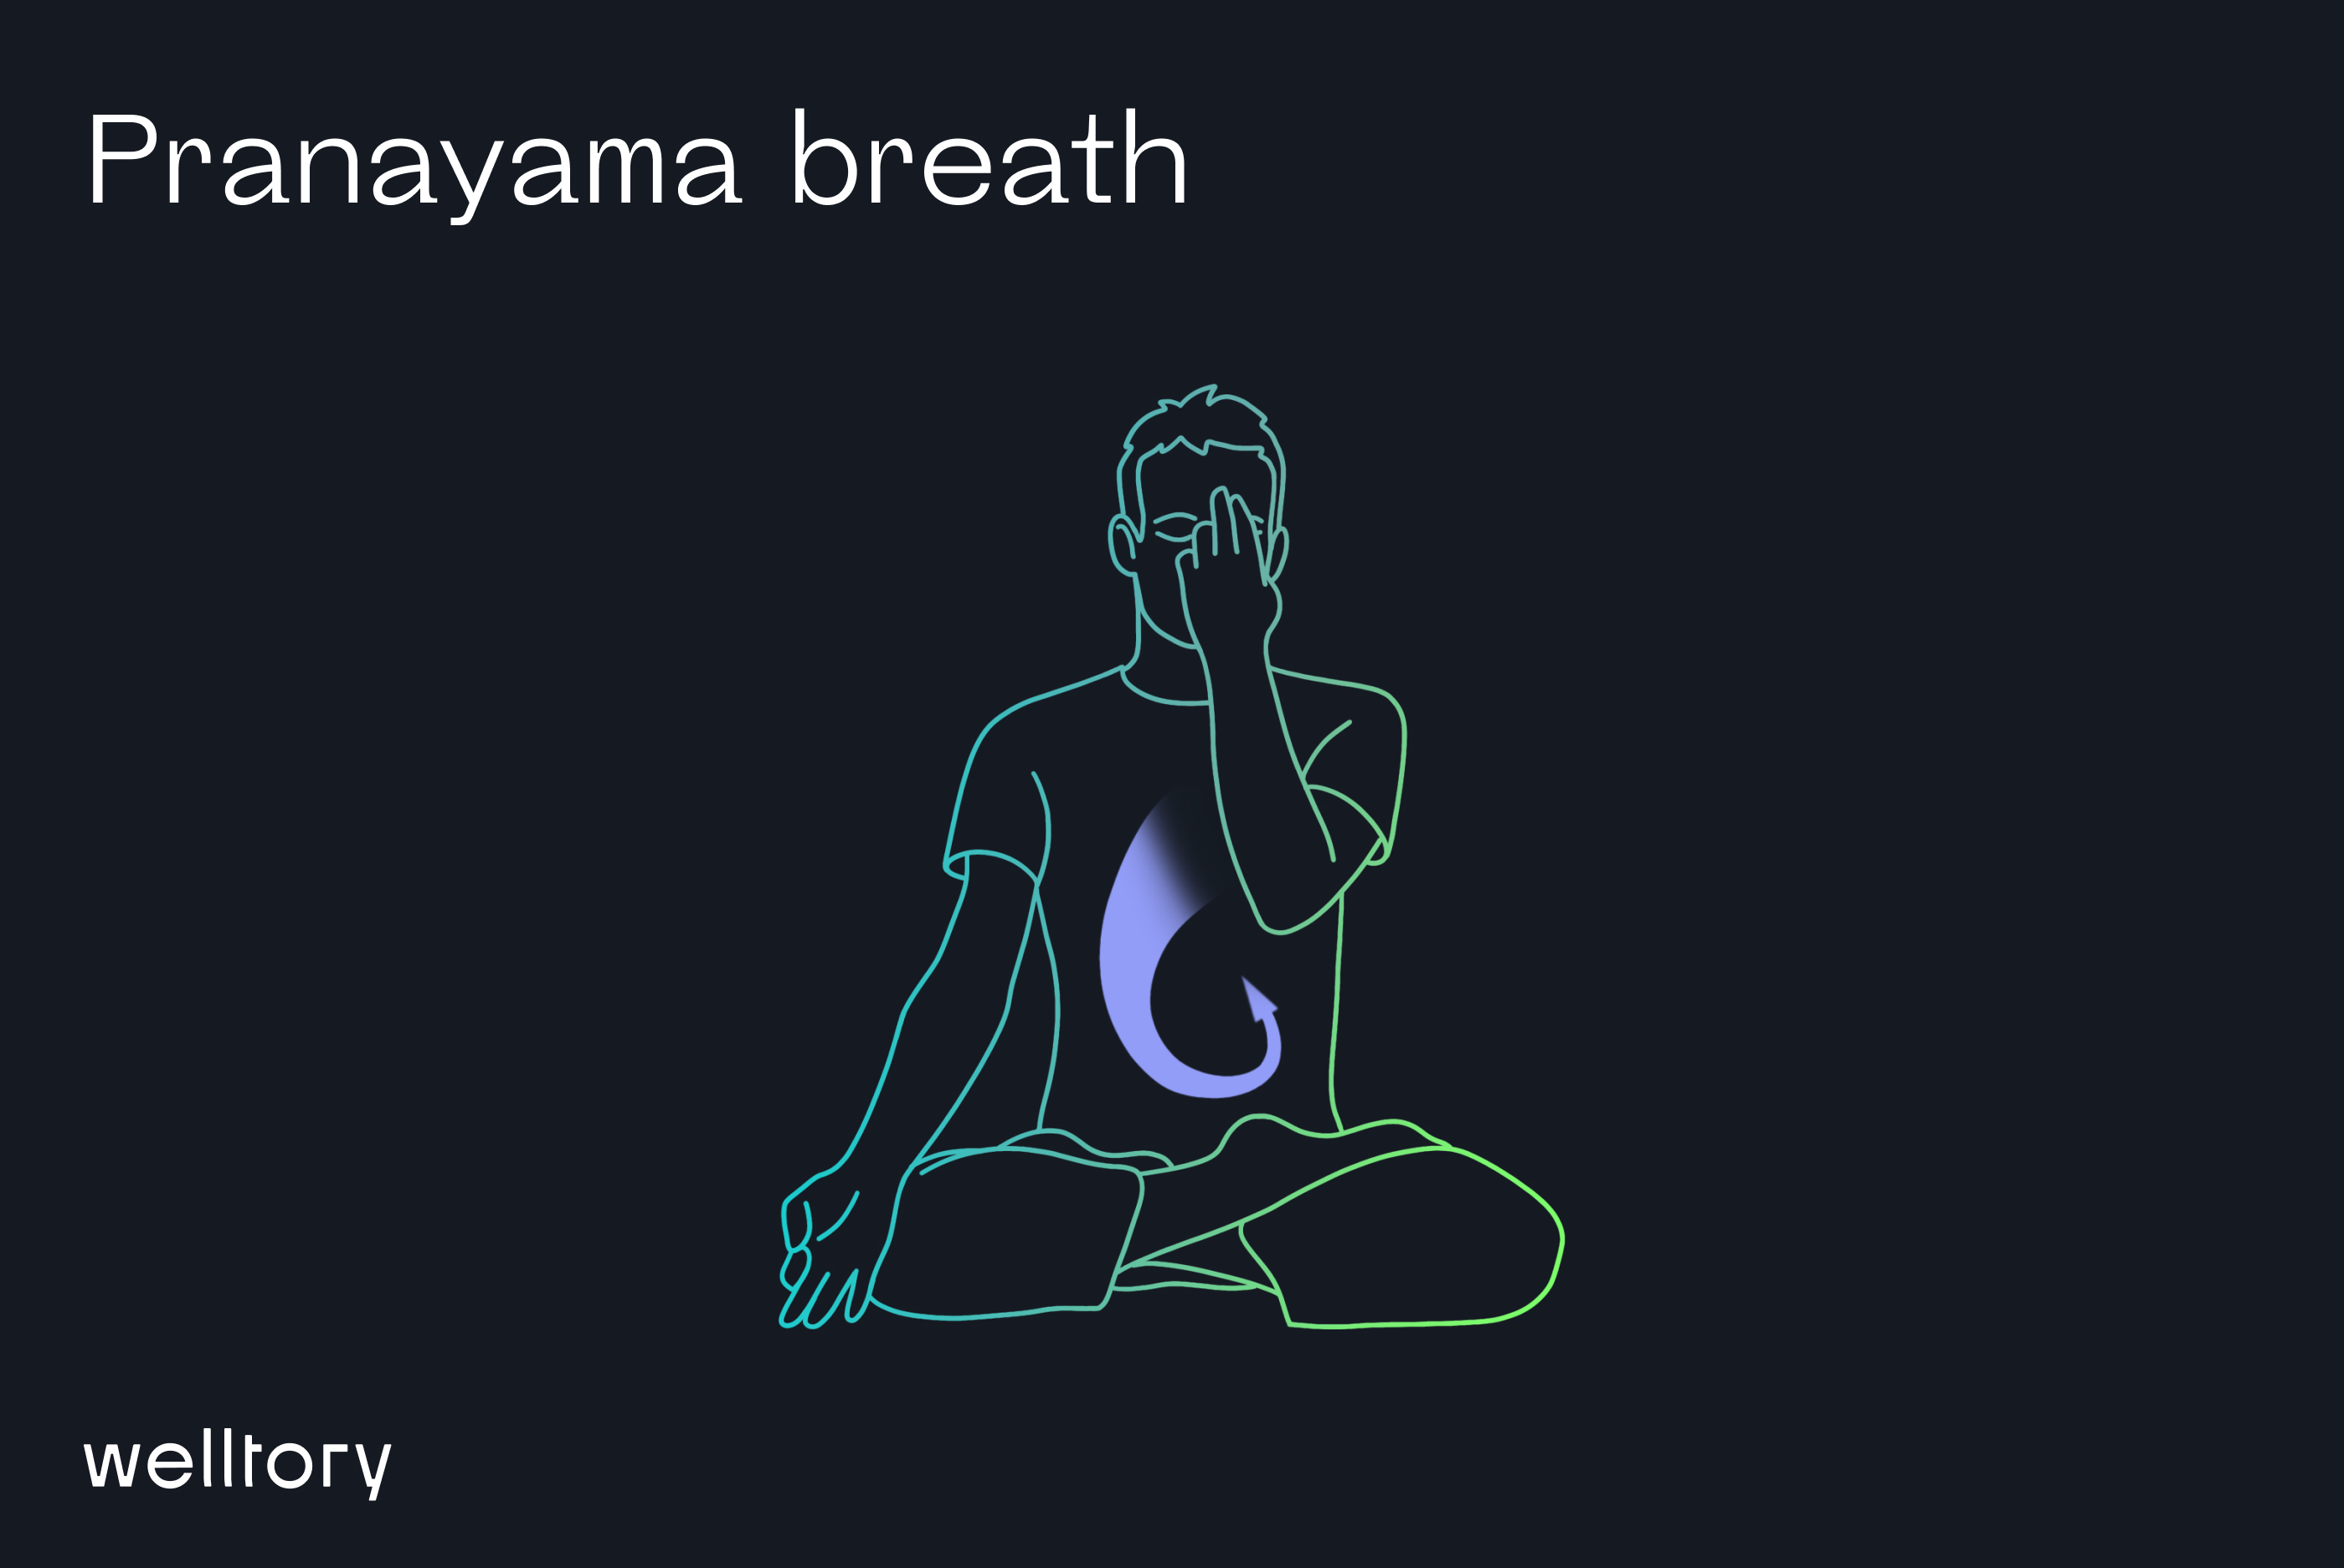 Pranayama breath